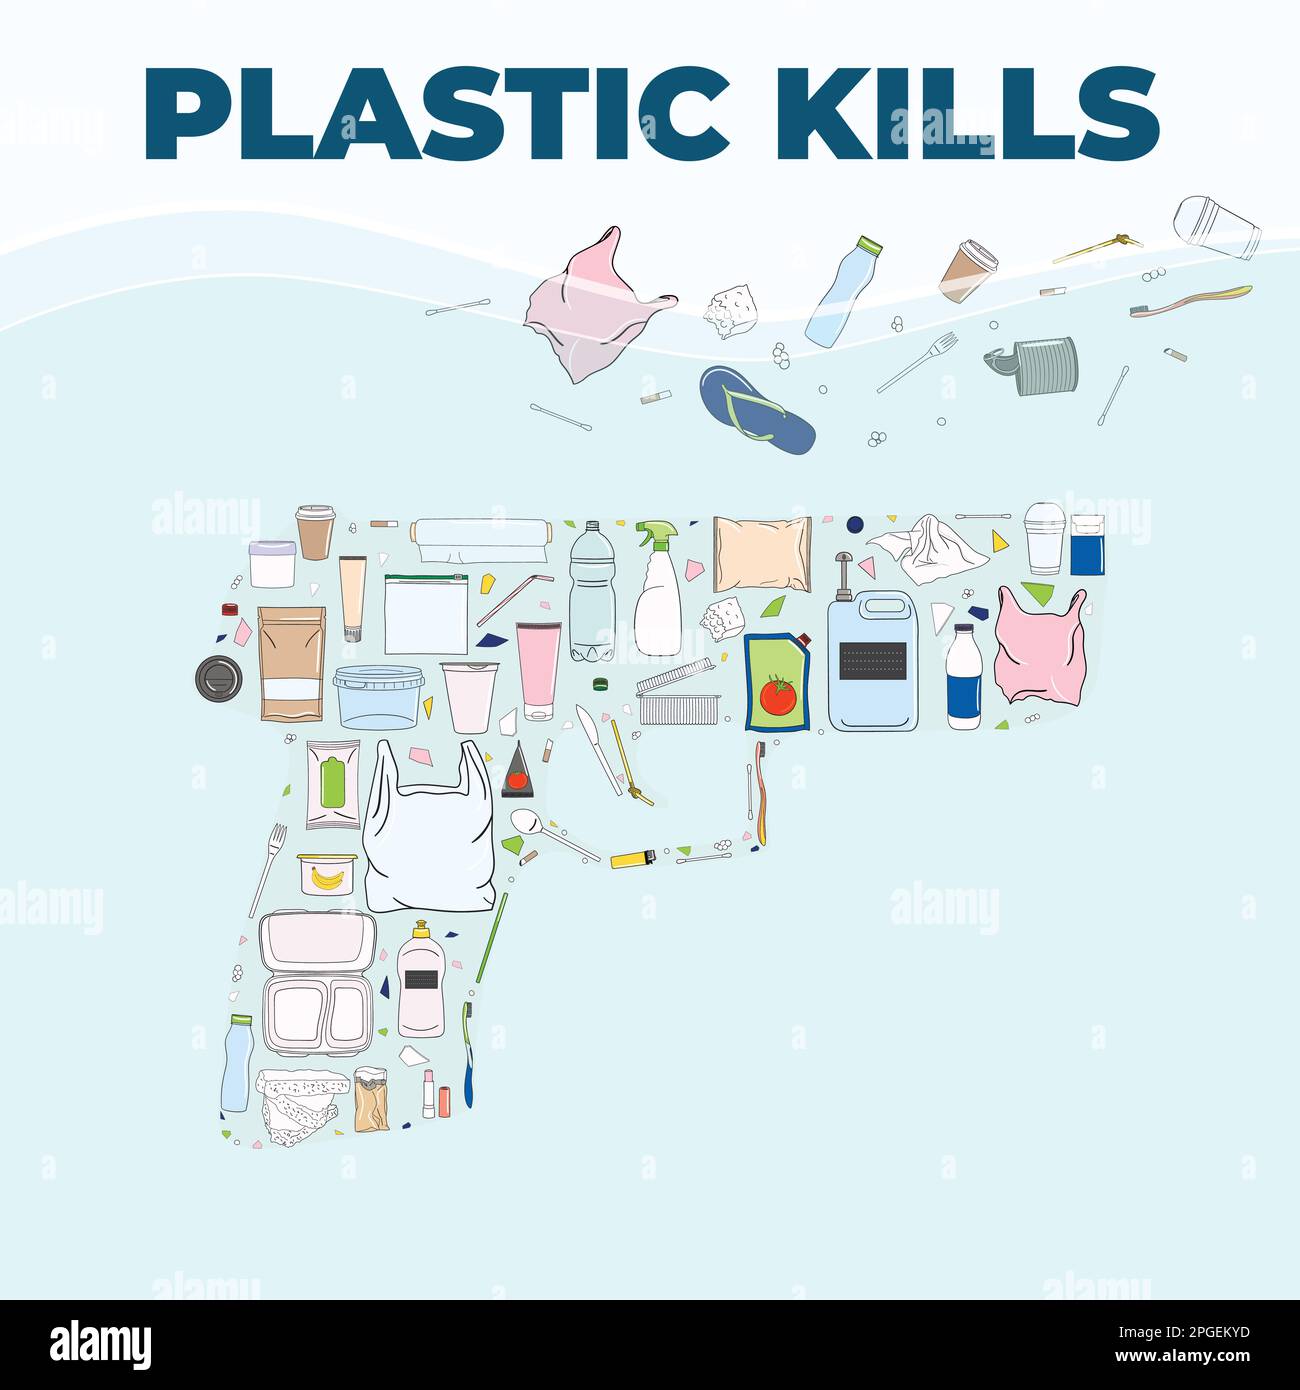 Plastic trash in a gun shaped. Plastic kills poster. Marine, Ocean, coastal pollution. Global environmental problems. Save the ocean concept. Hand dra Stock Vector